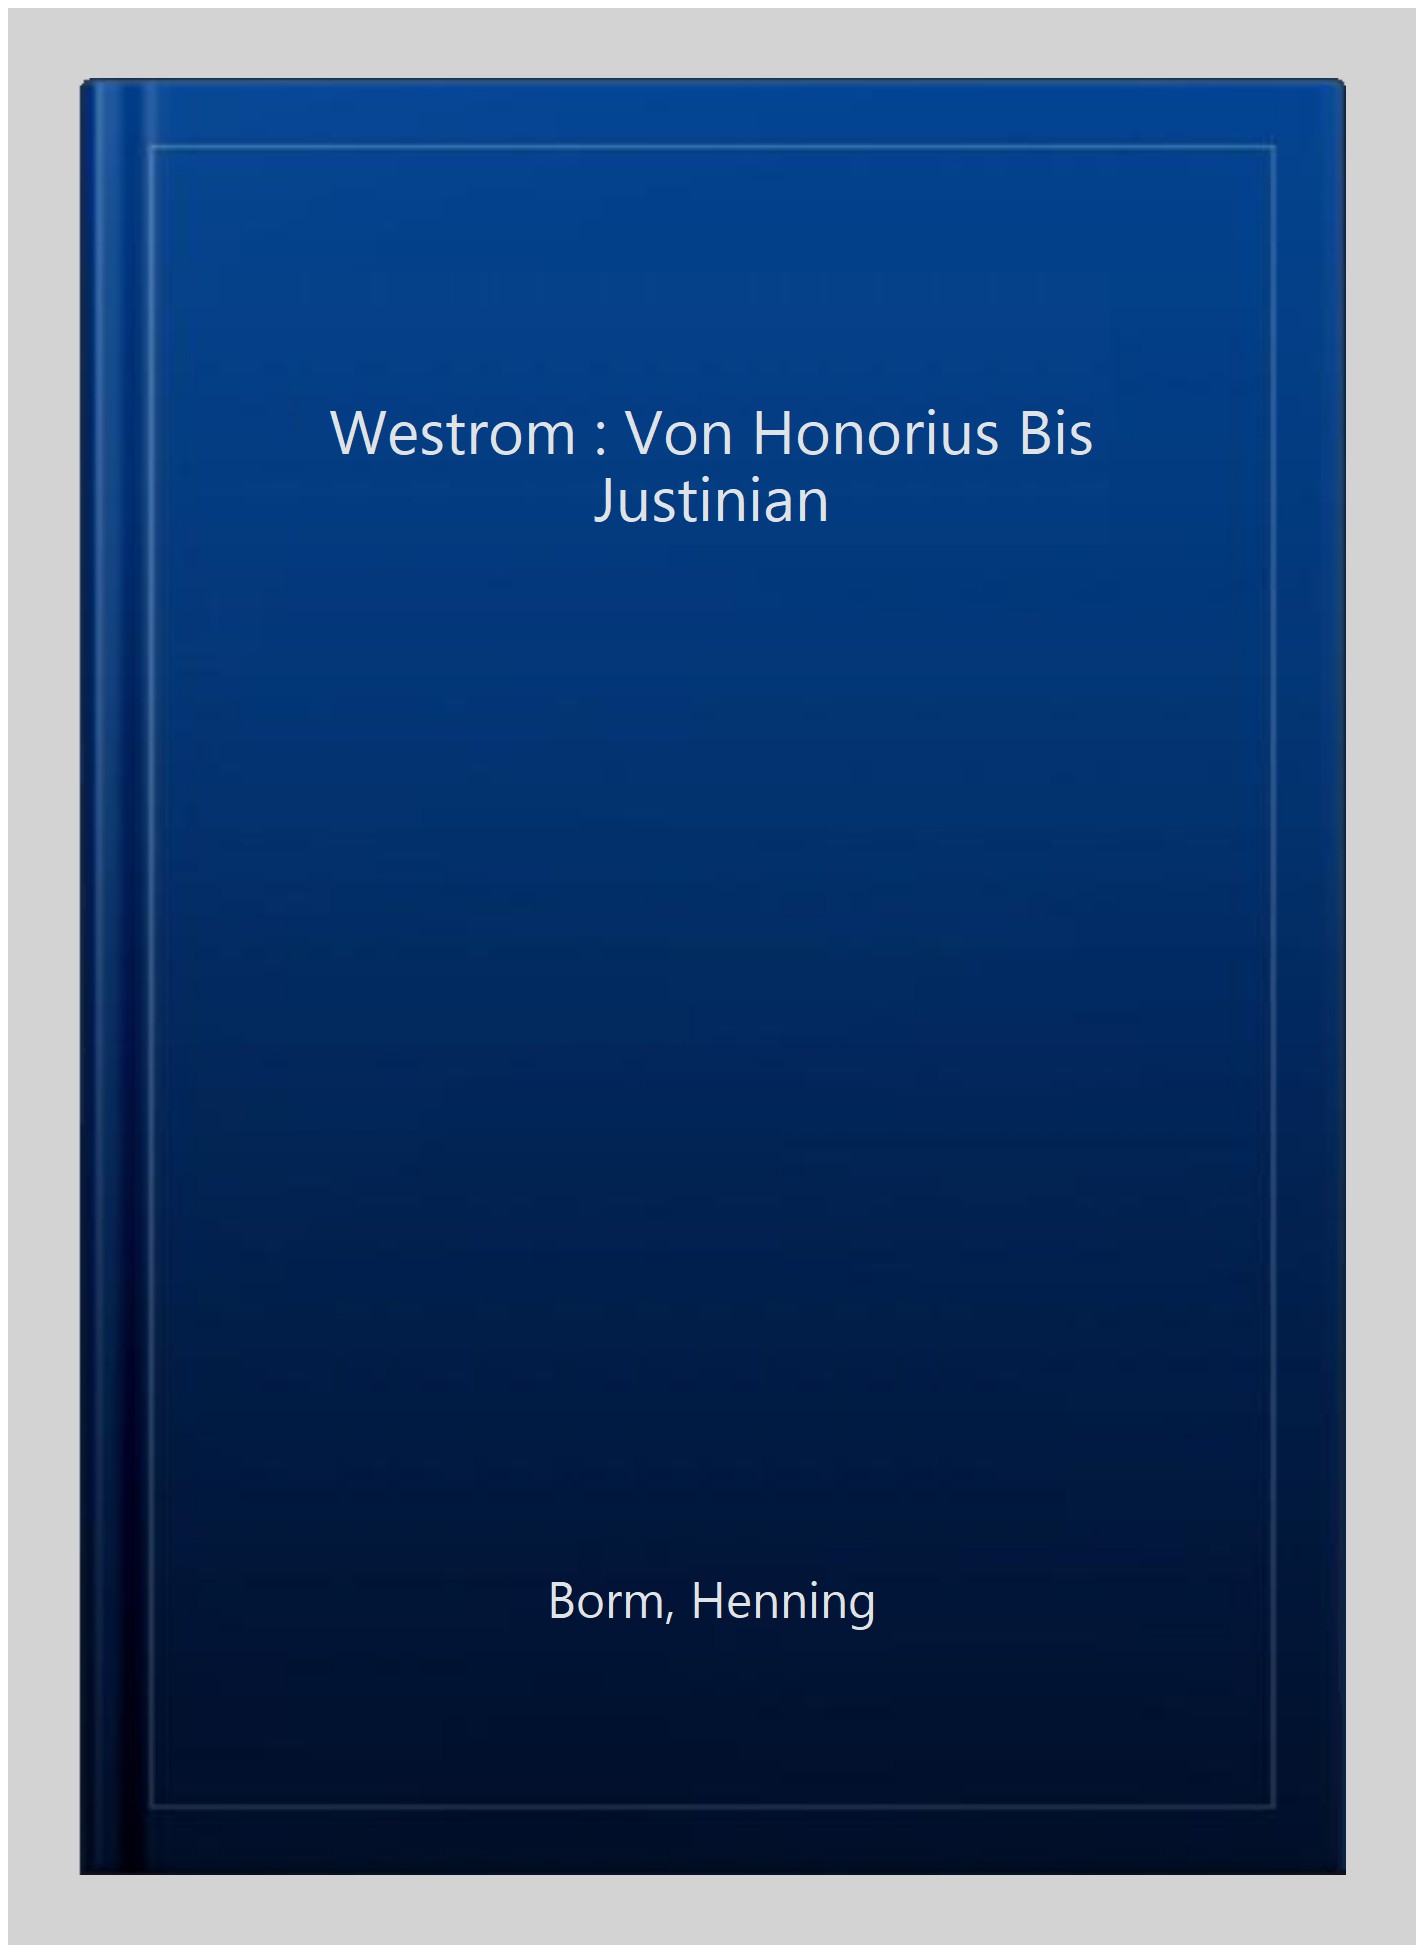 Westrom : Von Honorius Bis Justinian -Language: german - Borm, Henning